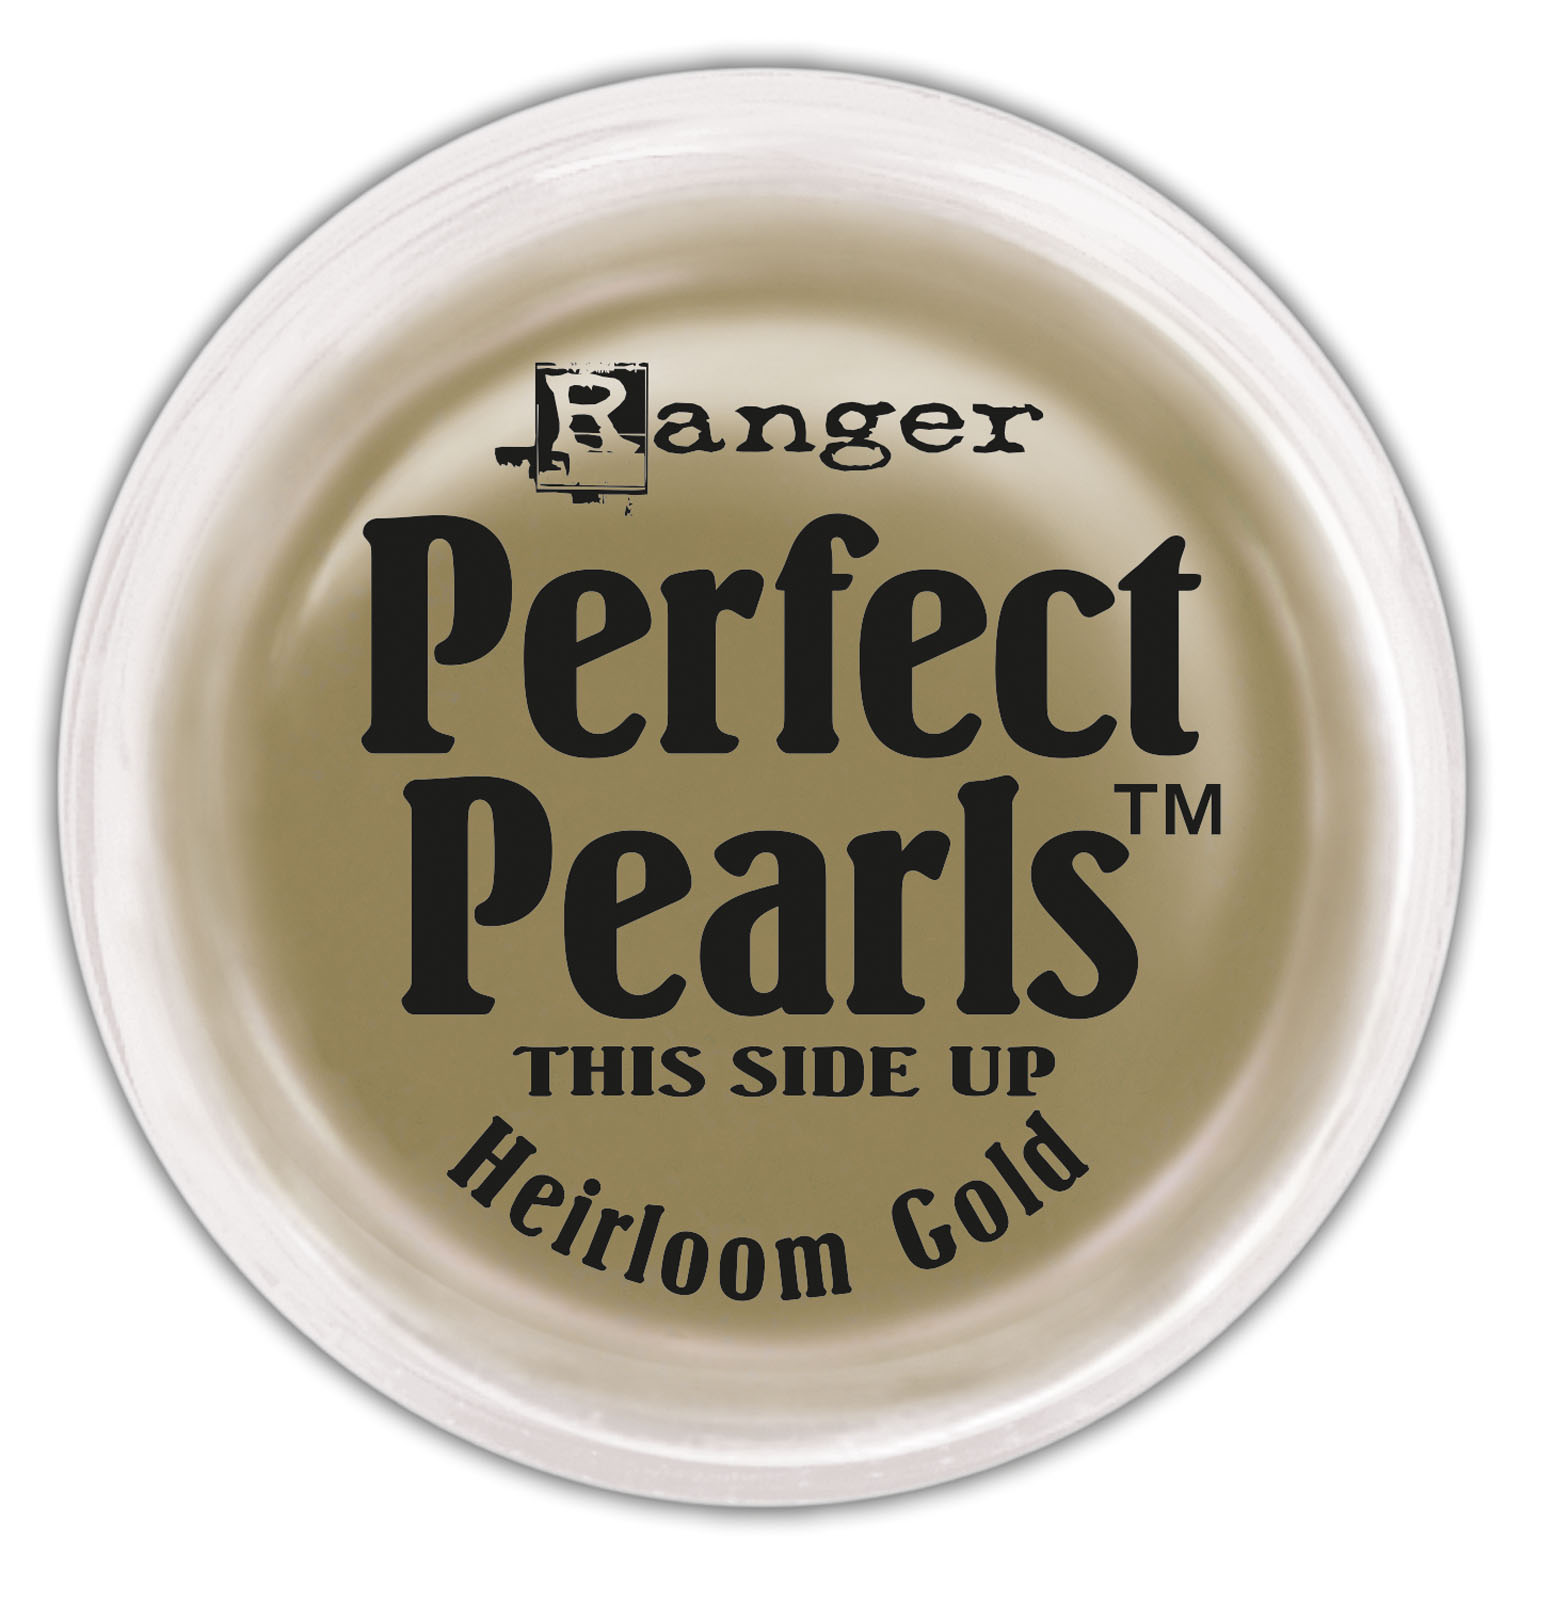 Ranger • Perfect pearls pigment powder Heirloom gold